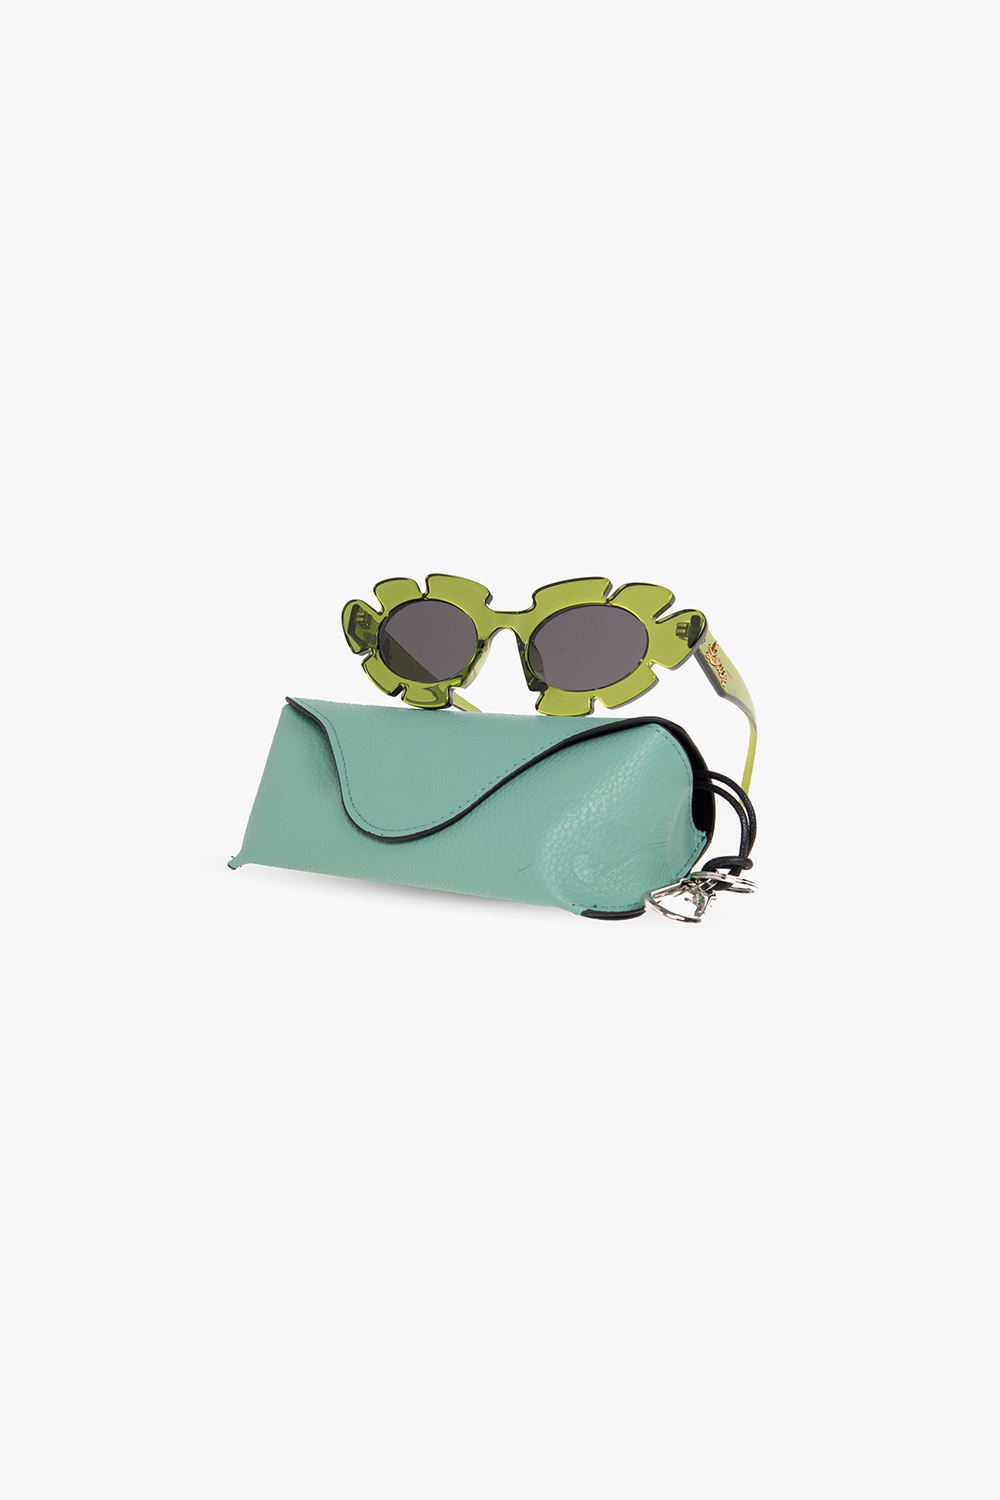 Loewe Dress sunglasses